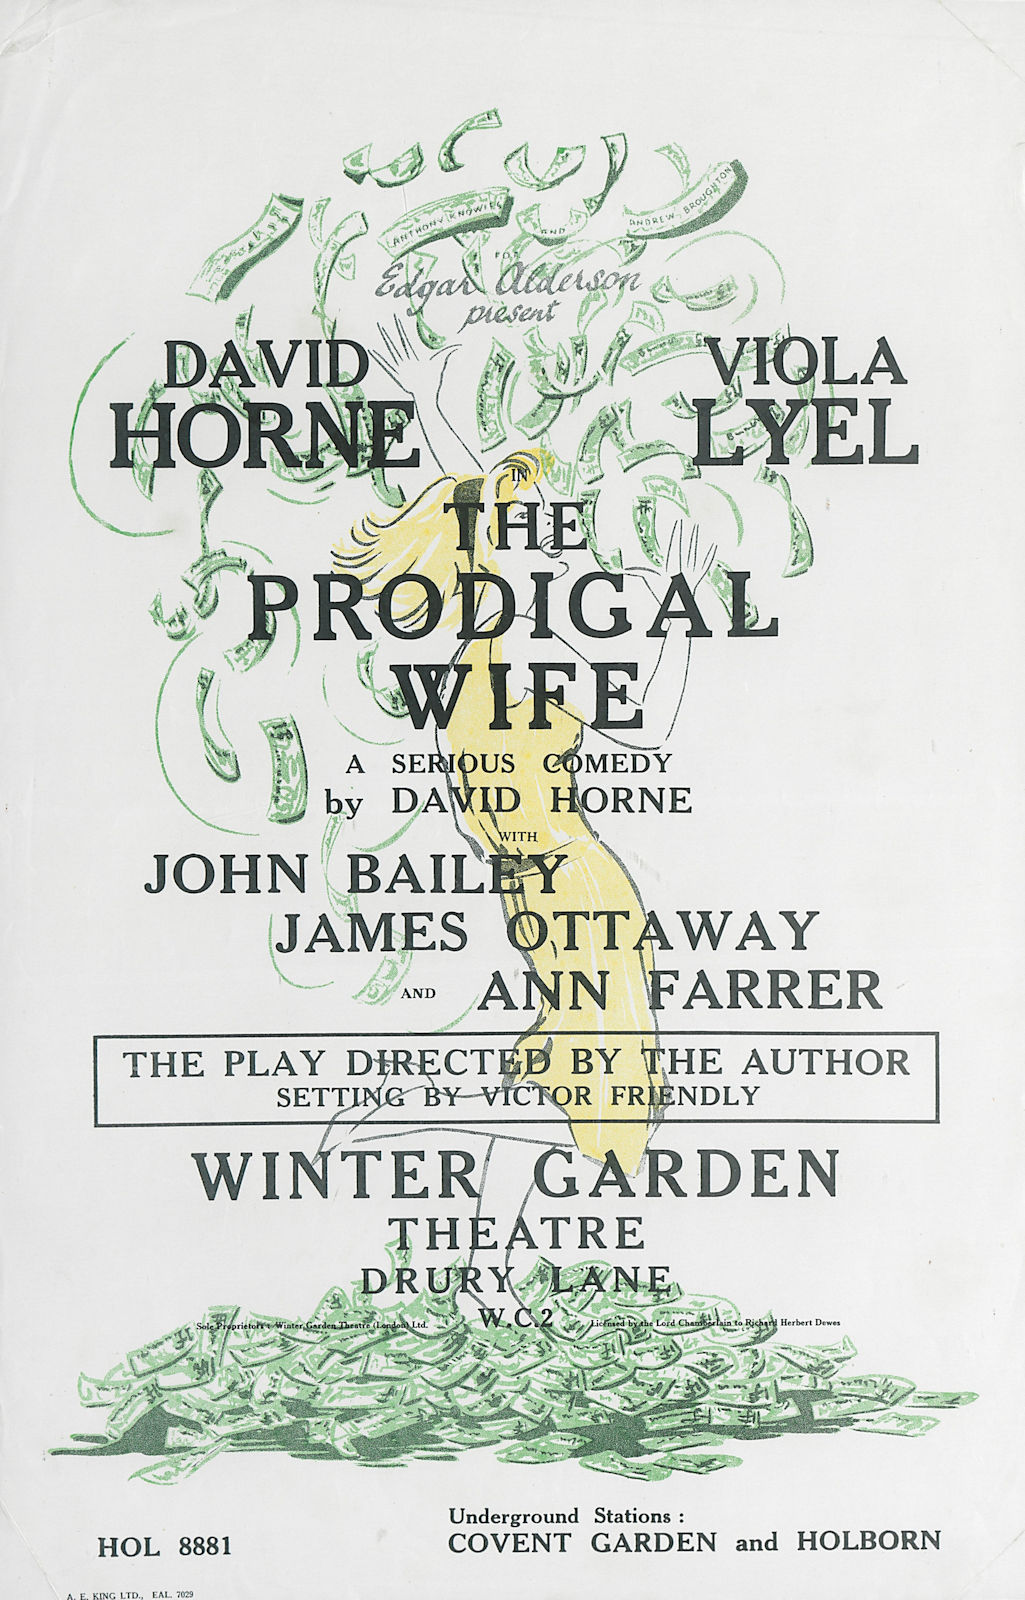 Winter Garden Theatre. The Prodigal Wife. Horne. Viola Lyel, James Ottaway 1959